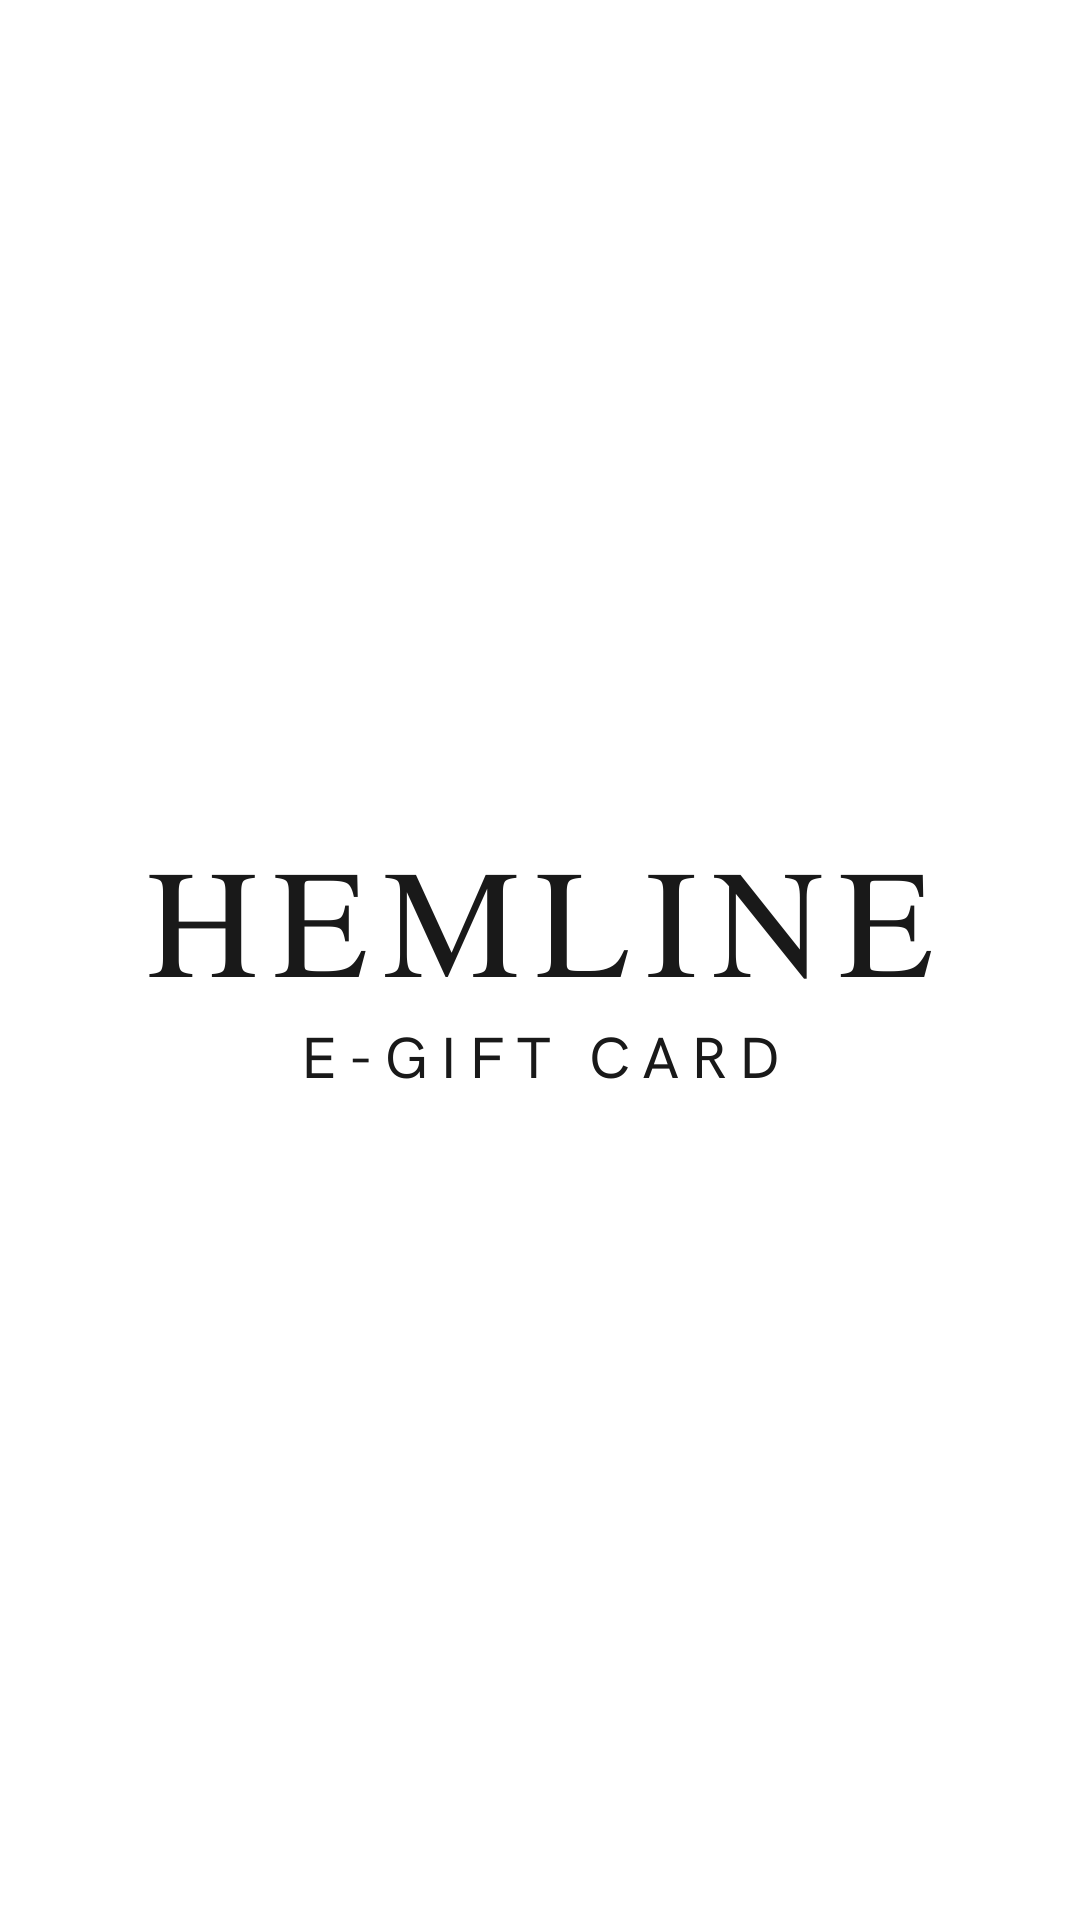 Hemline College Station E-Gift Card